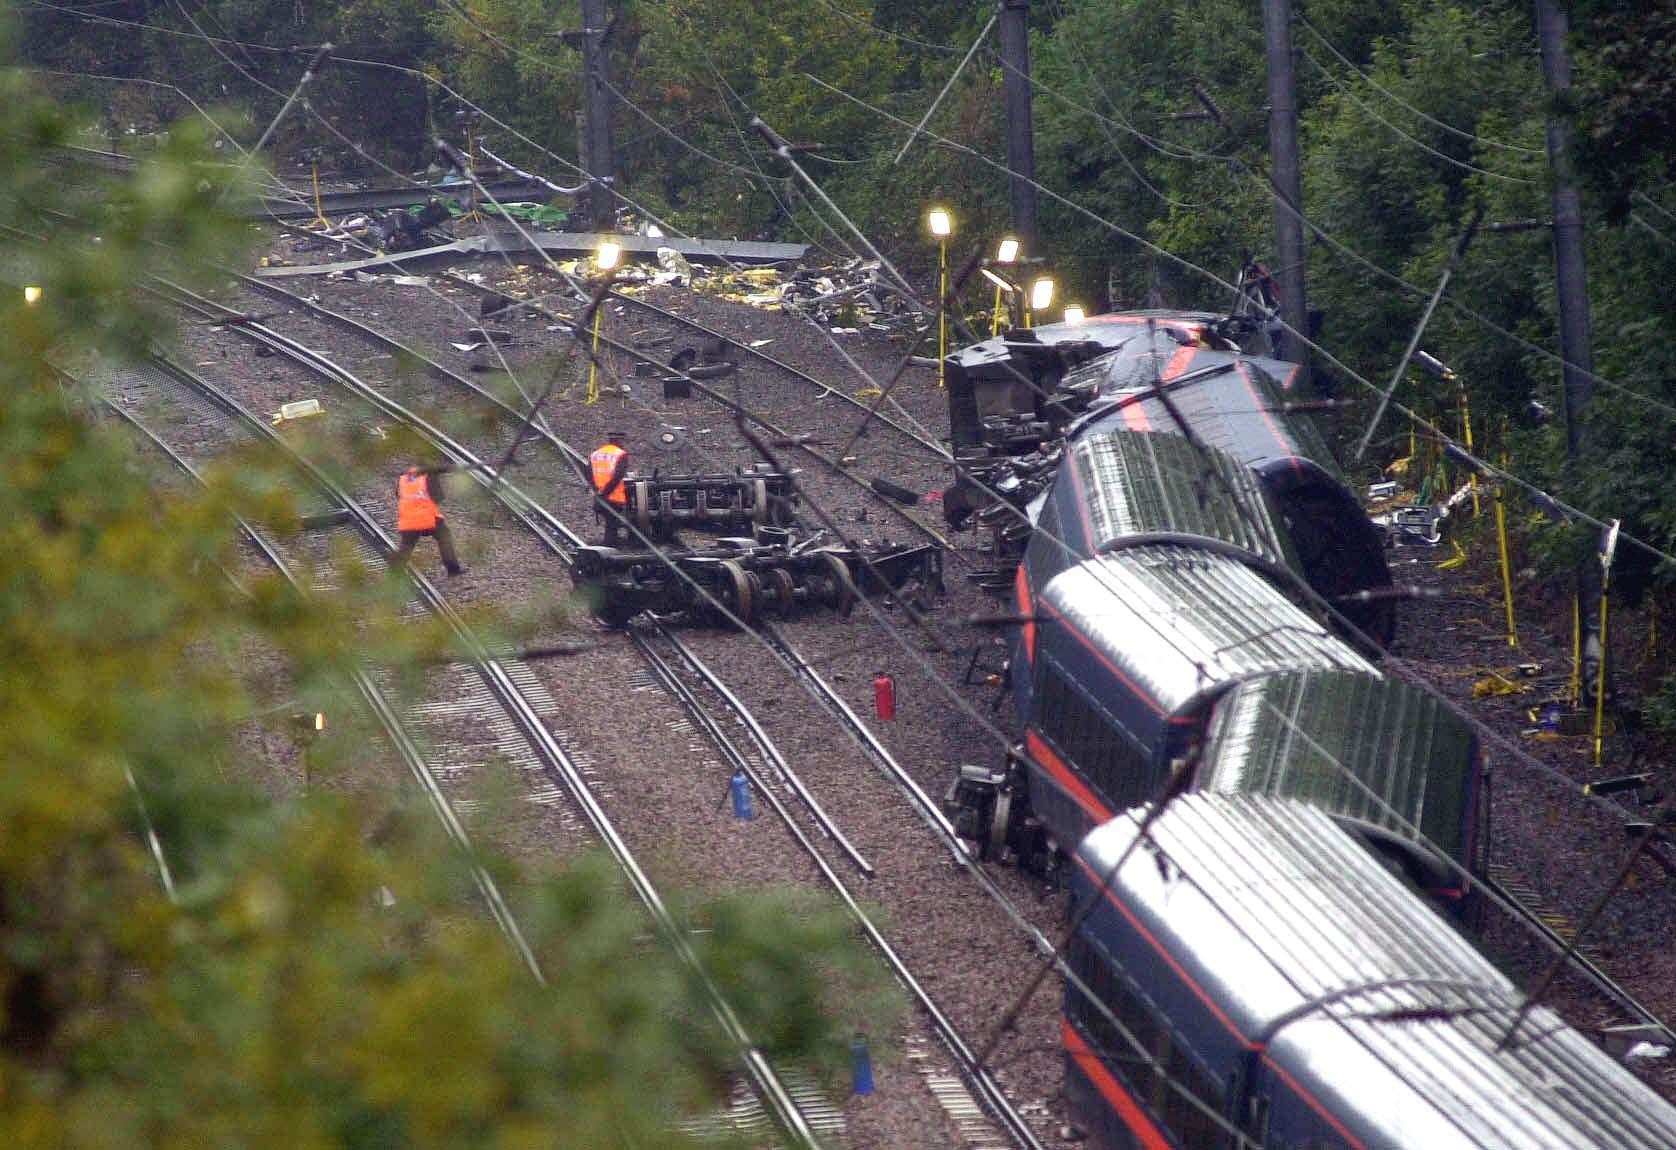 Four passengers were killed when the train derailed on October 17 2000 (Stefan Rousseau/PA)